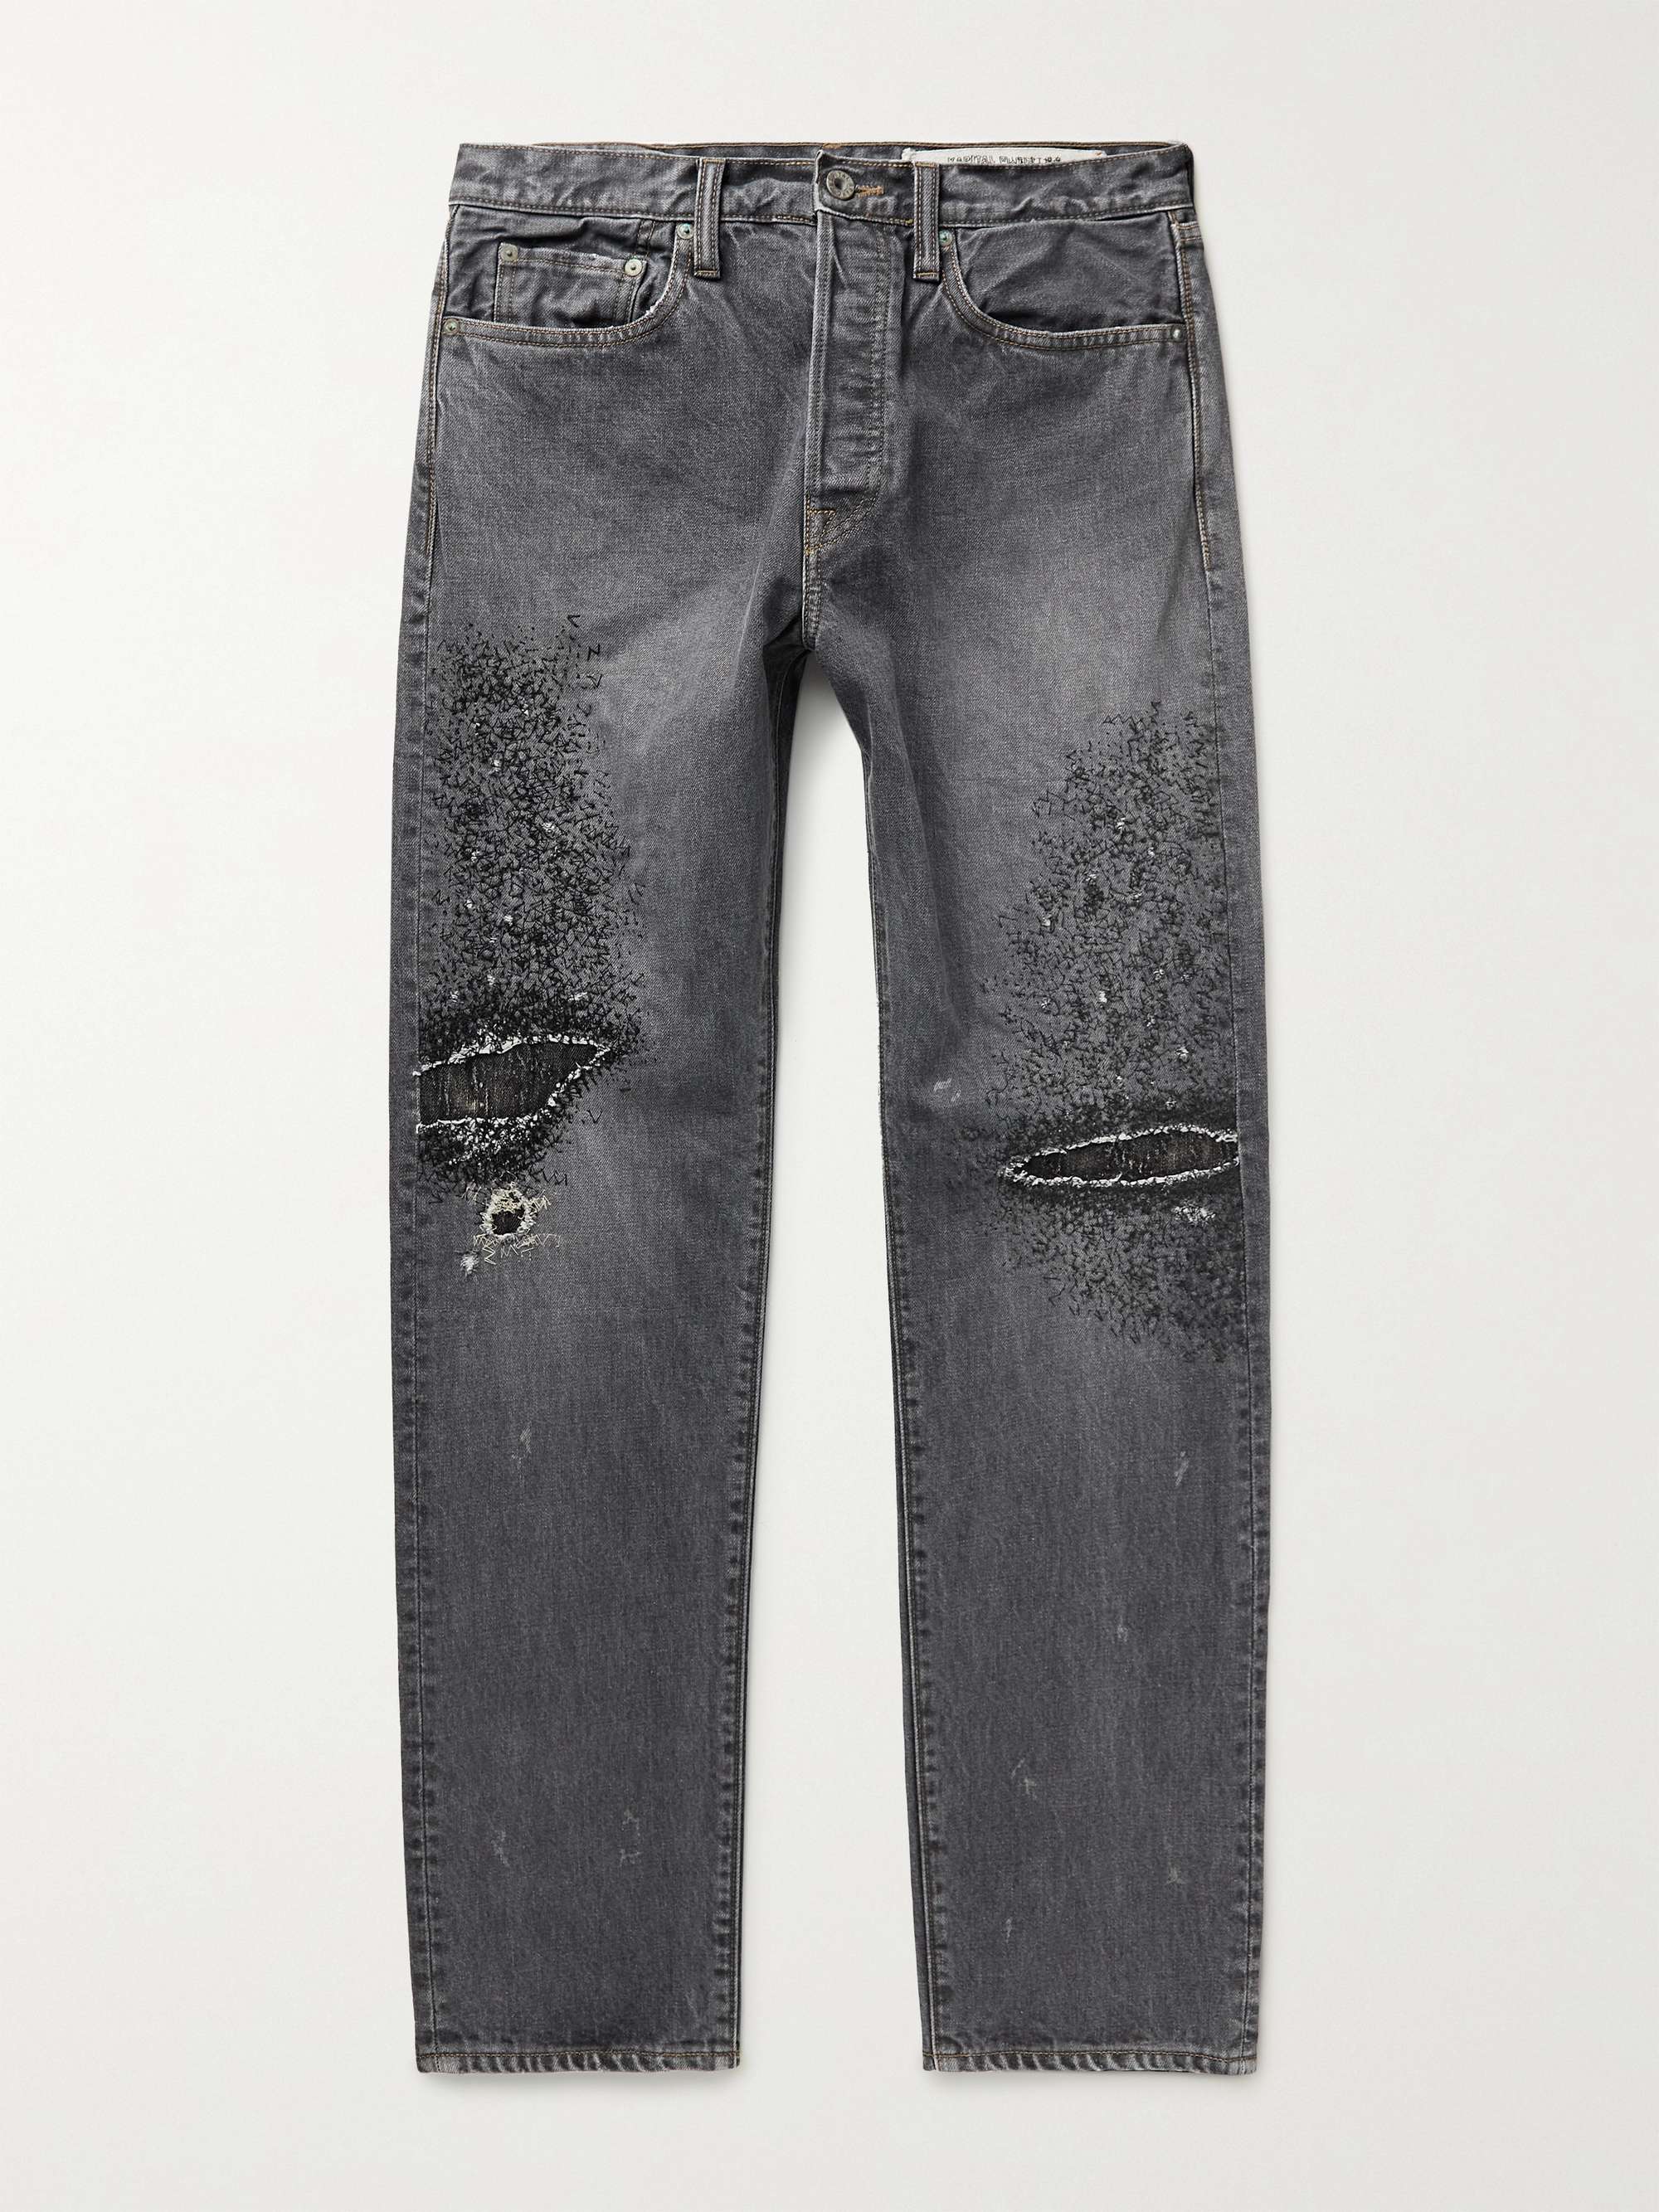 Monkey CISCO Distressed Denim Jeans